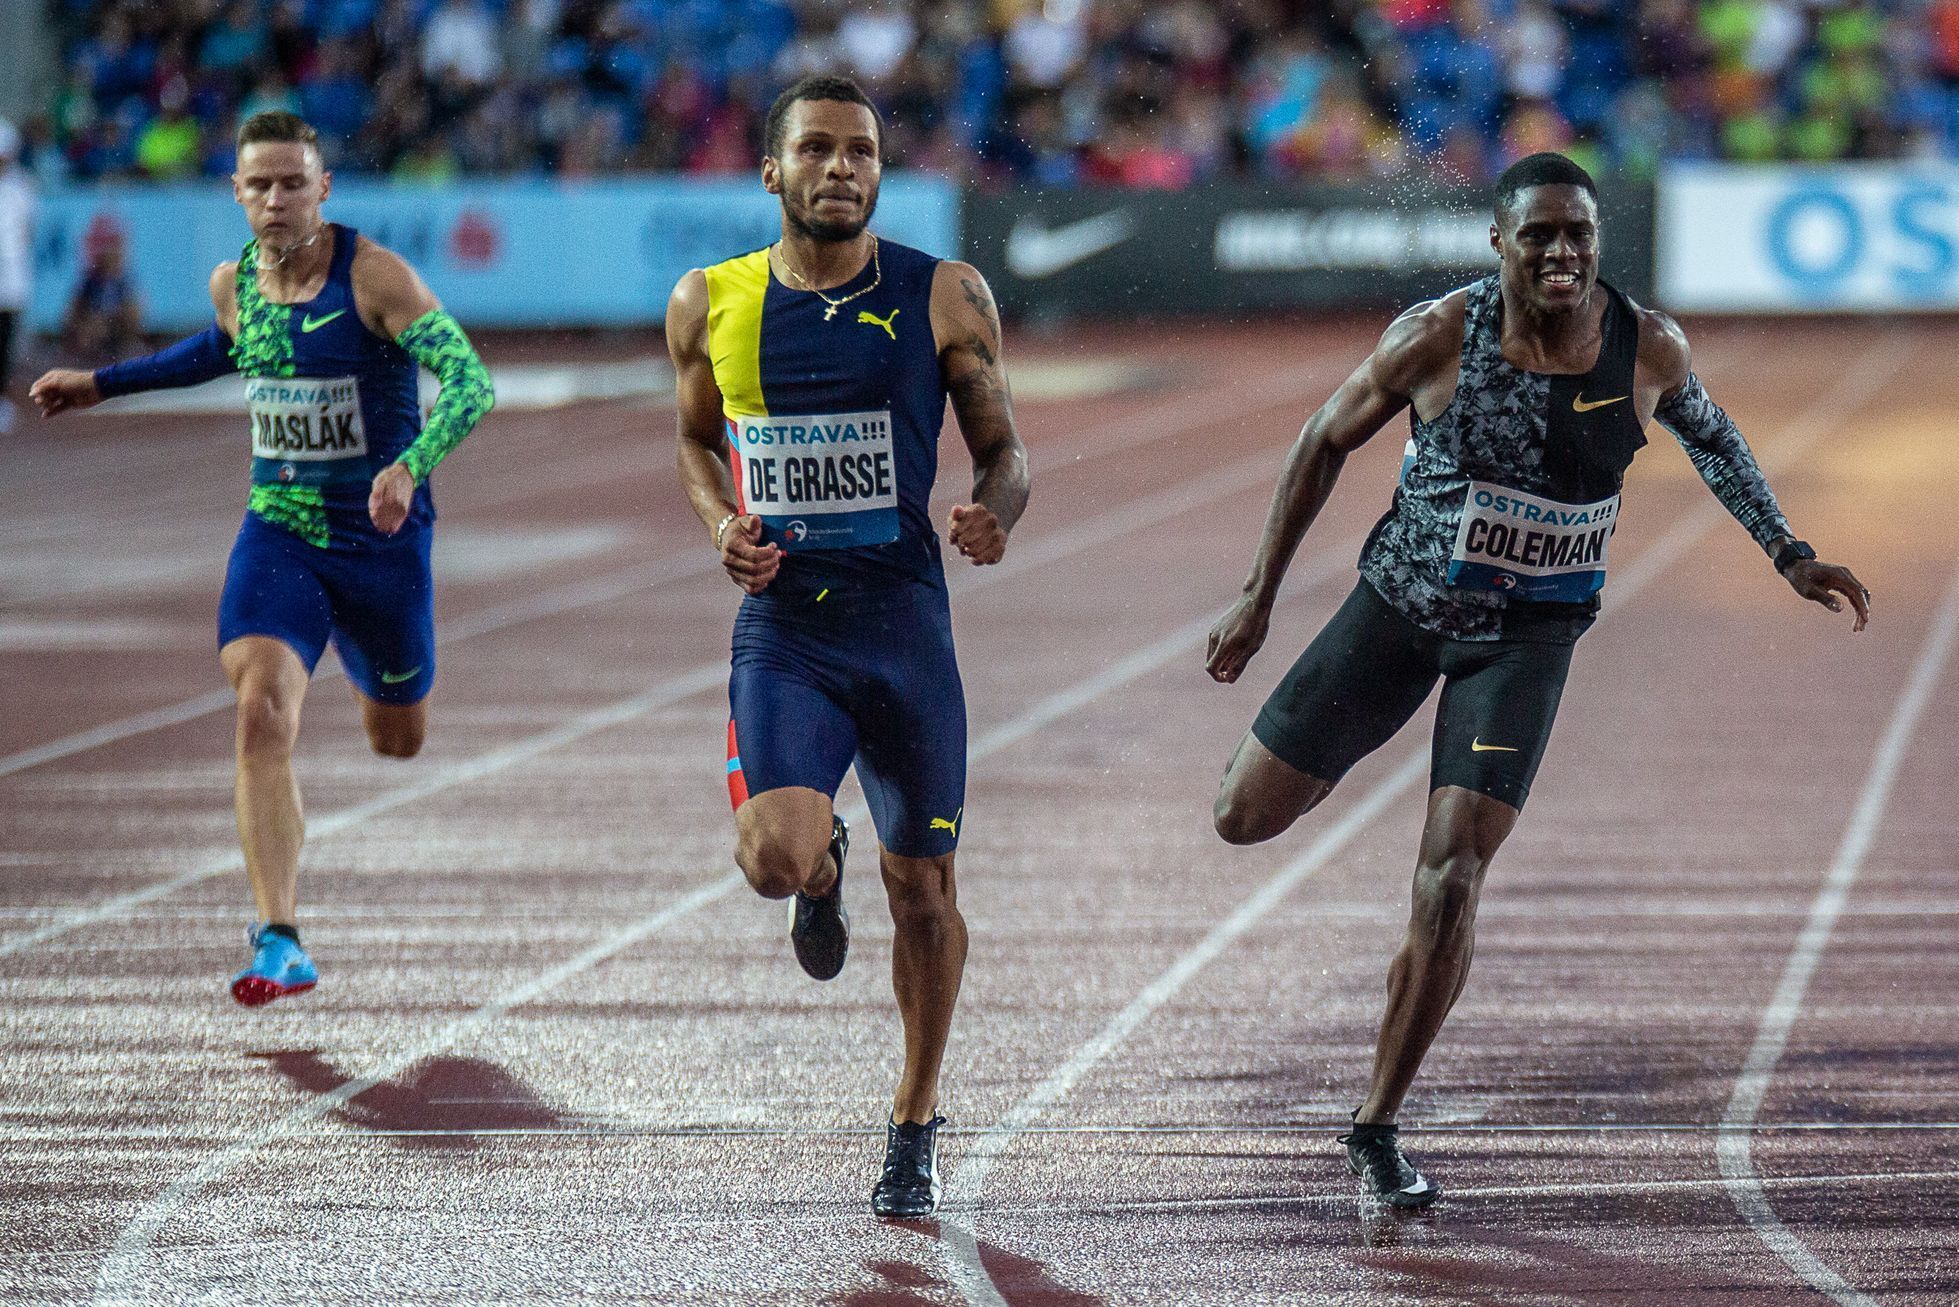 Zlatá tretra 2019, závod na 200 metrů: Zleva Pavel Maslák, Andre De Grasse (Kanada) a Christian Coleman (USA)